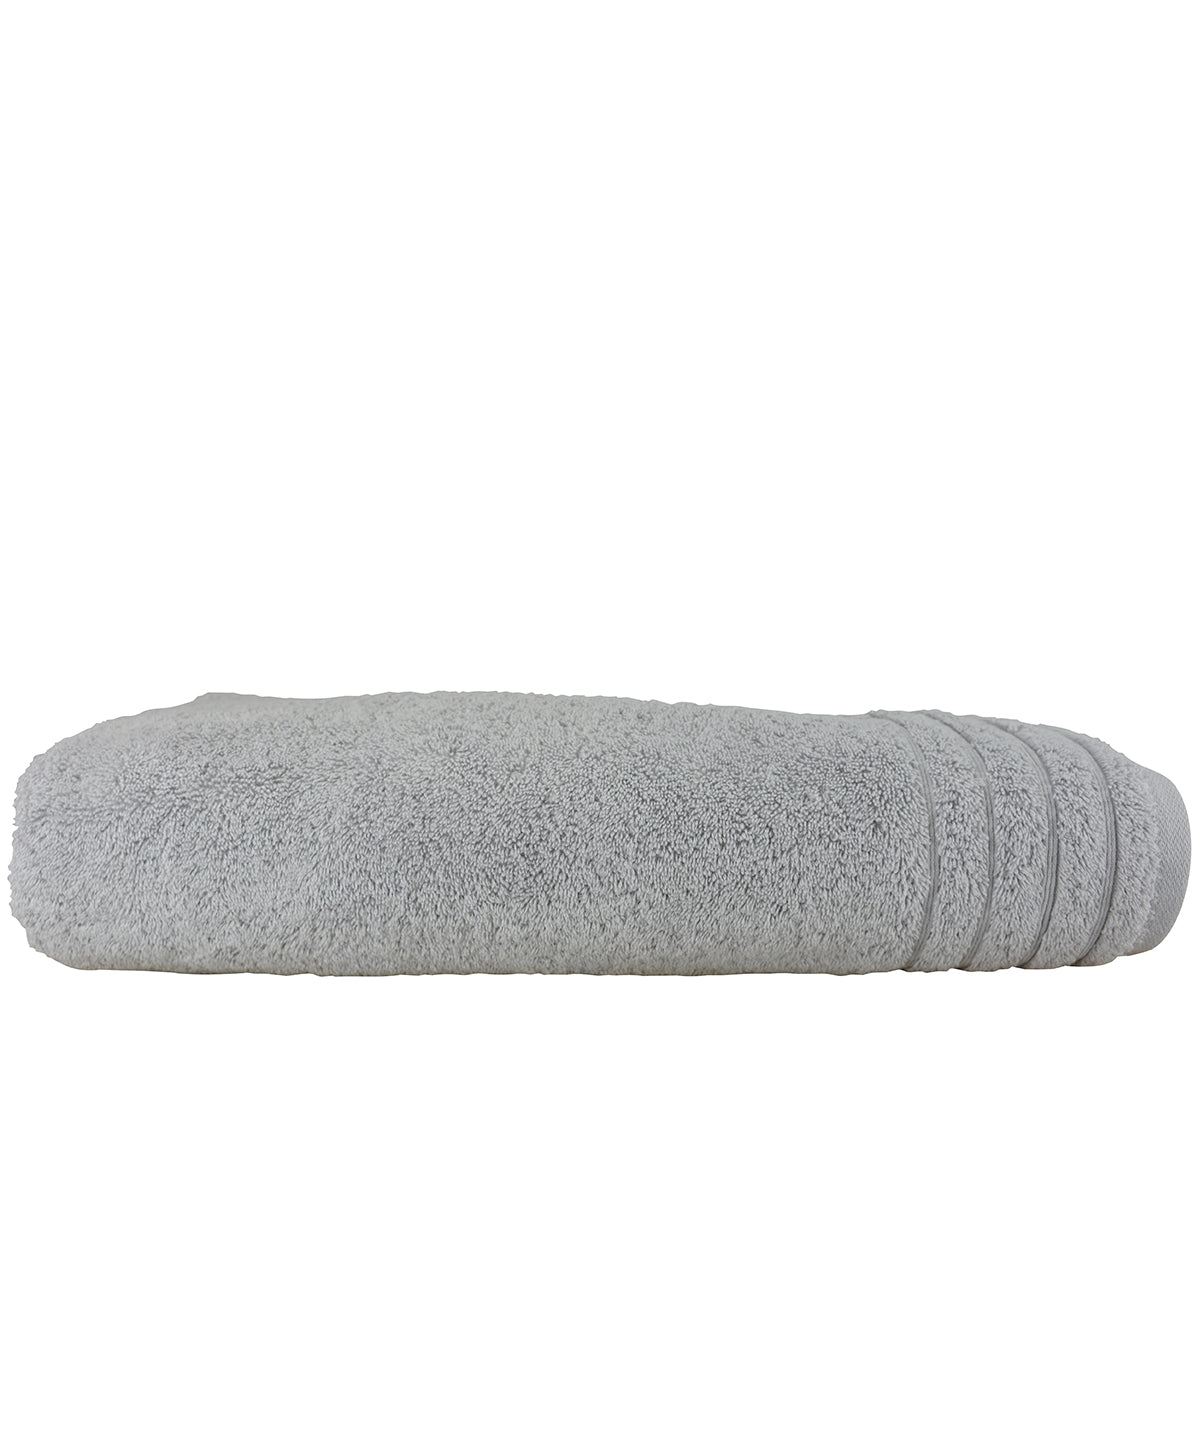 Personalised Towels - Mid Grey A&R Towels ARTG® Organic beach towel